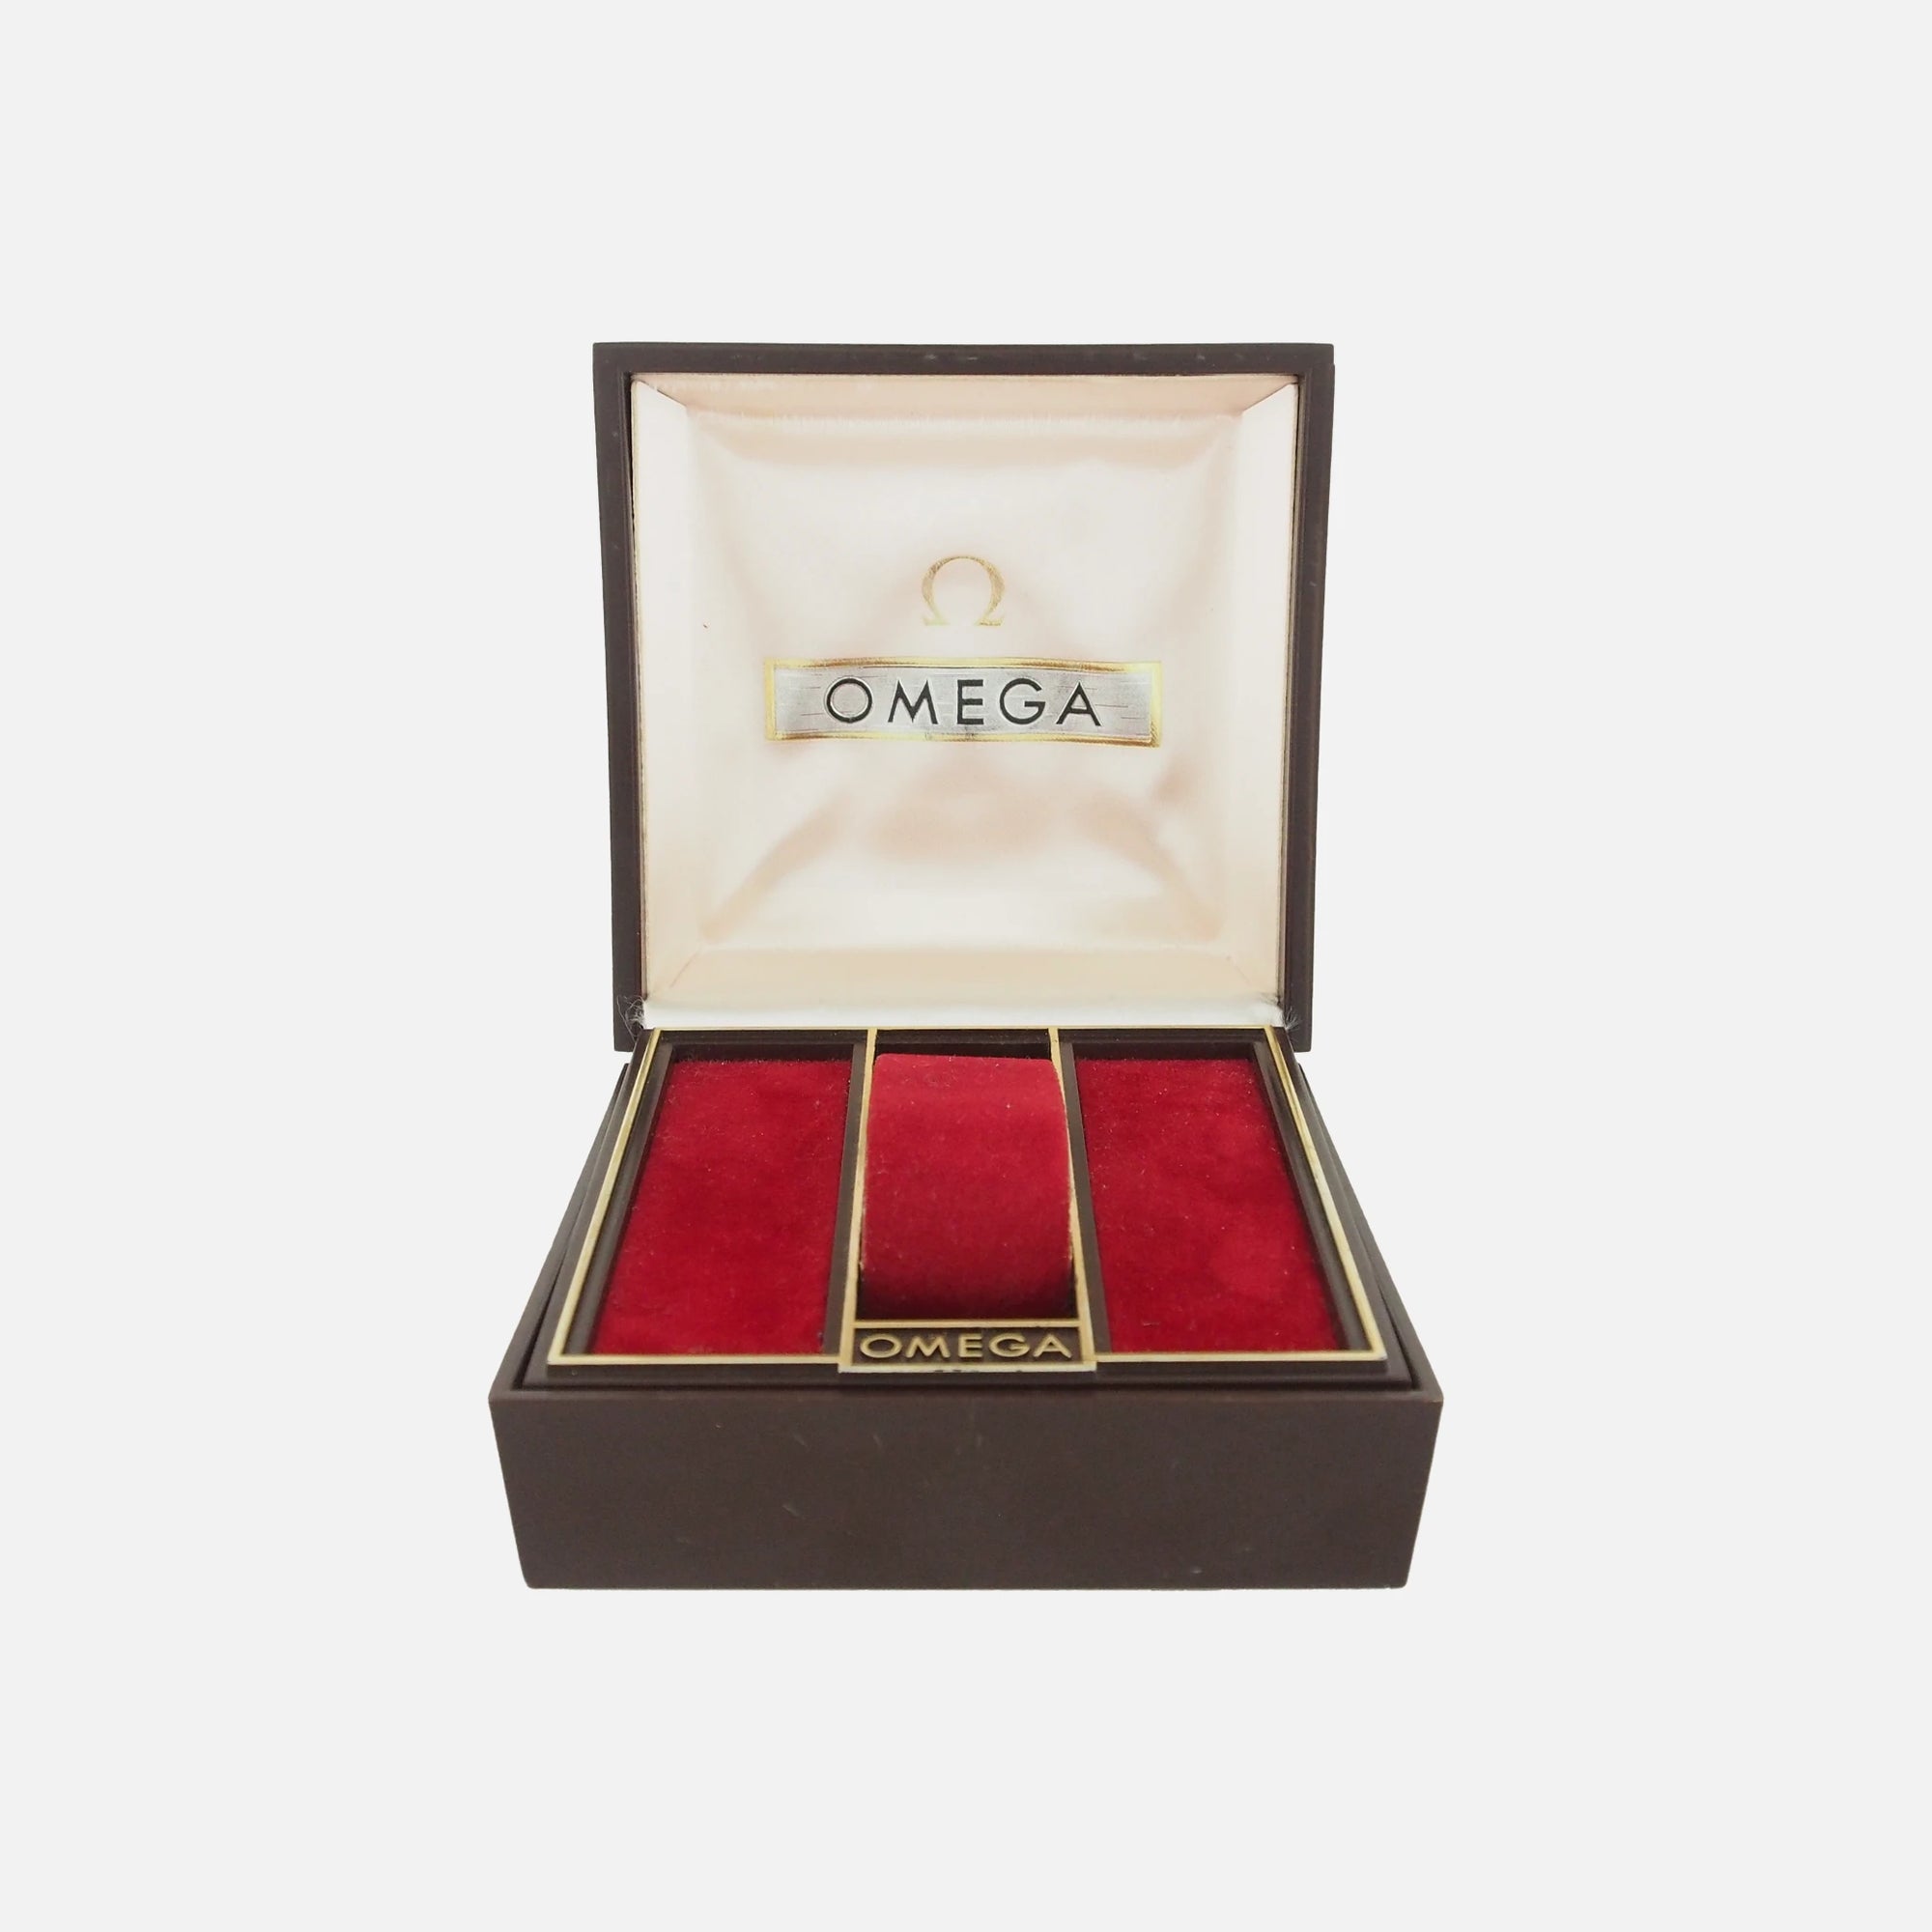 1960s - 1970s Omega Vintage Watch Box for sale - Vintage Watch Leader 